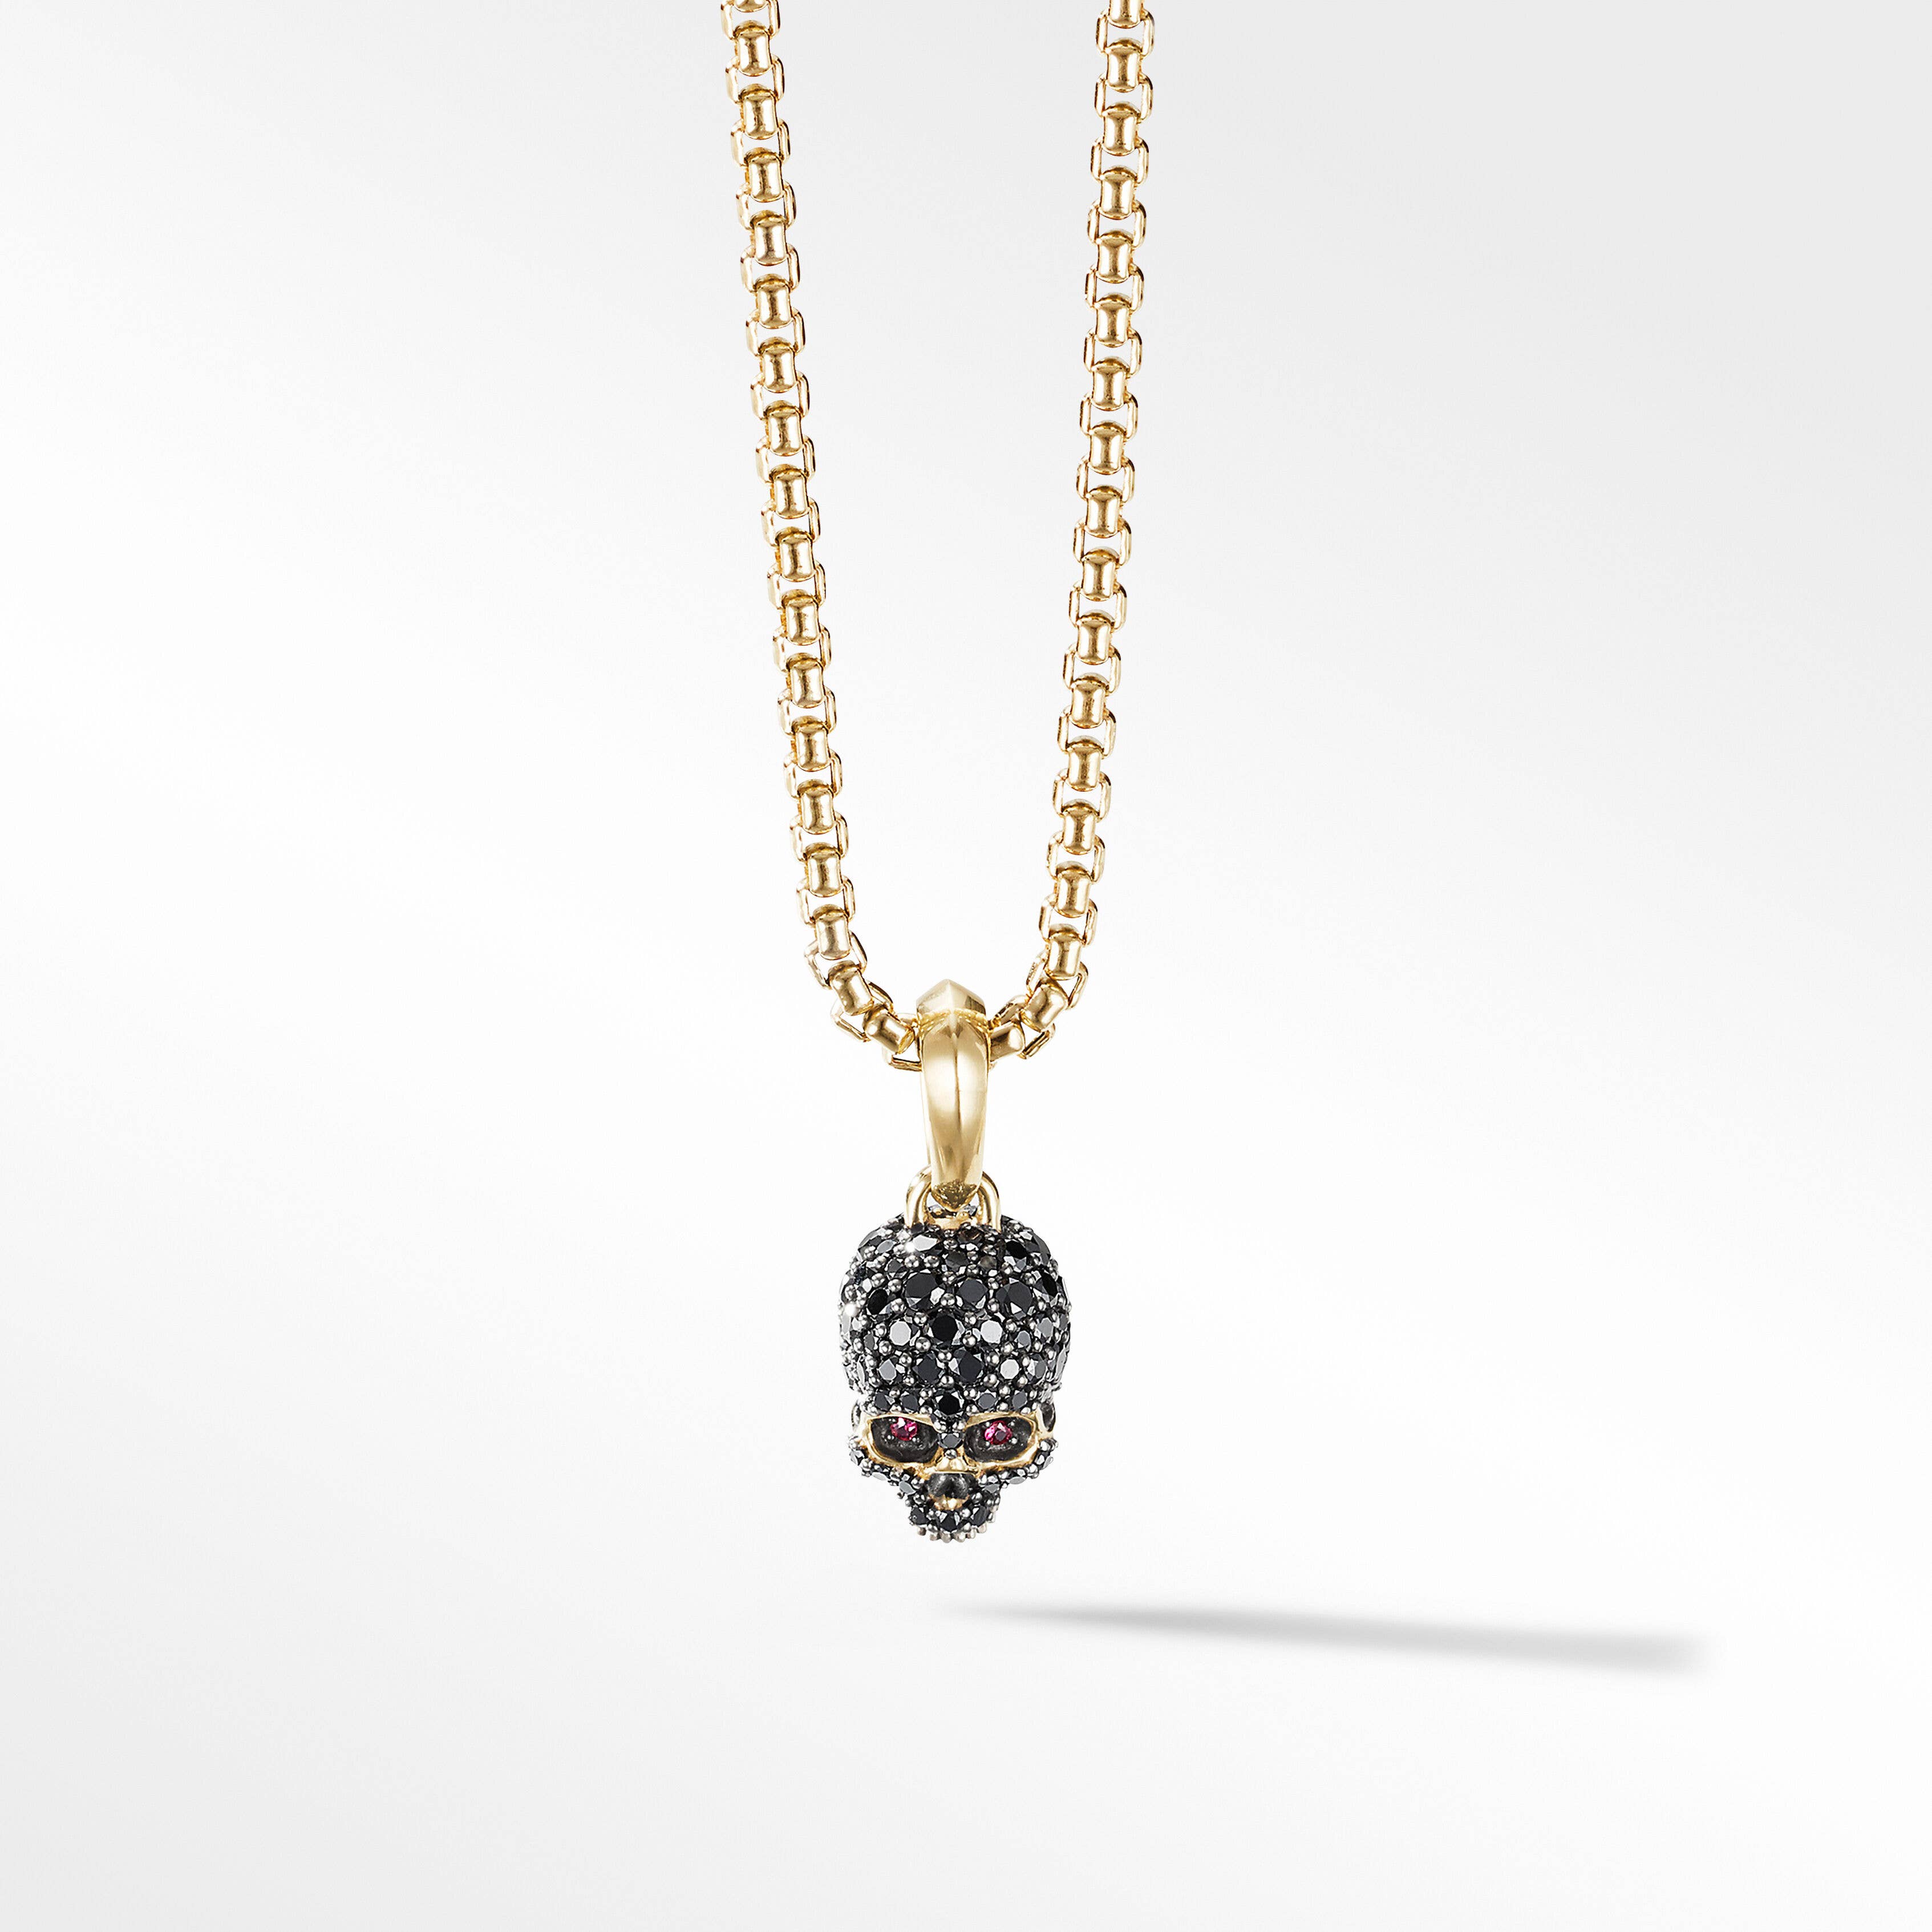 Memento Mori Skull Amulet with Full Pavé Black Diamonds, Rubies and 18K Yellow Gold